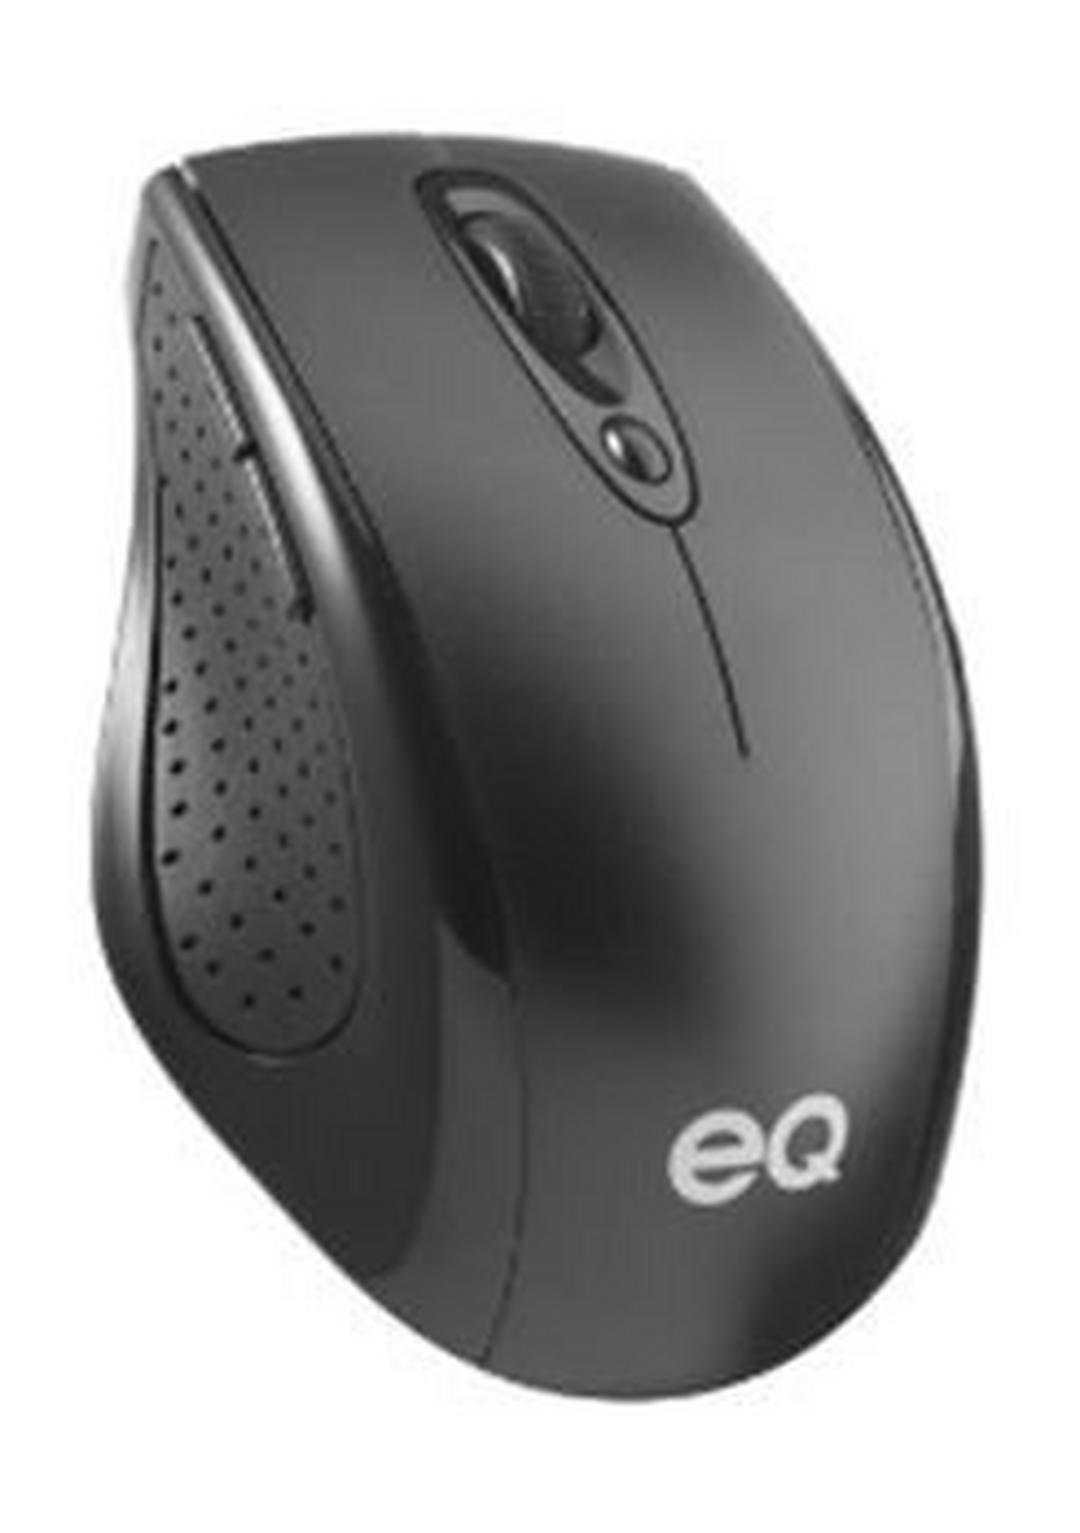 EQ M2018G Wireless Mouse - Black